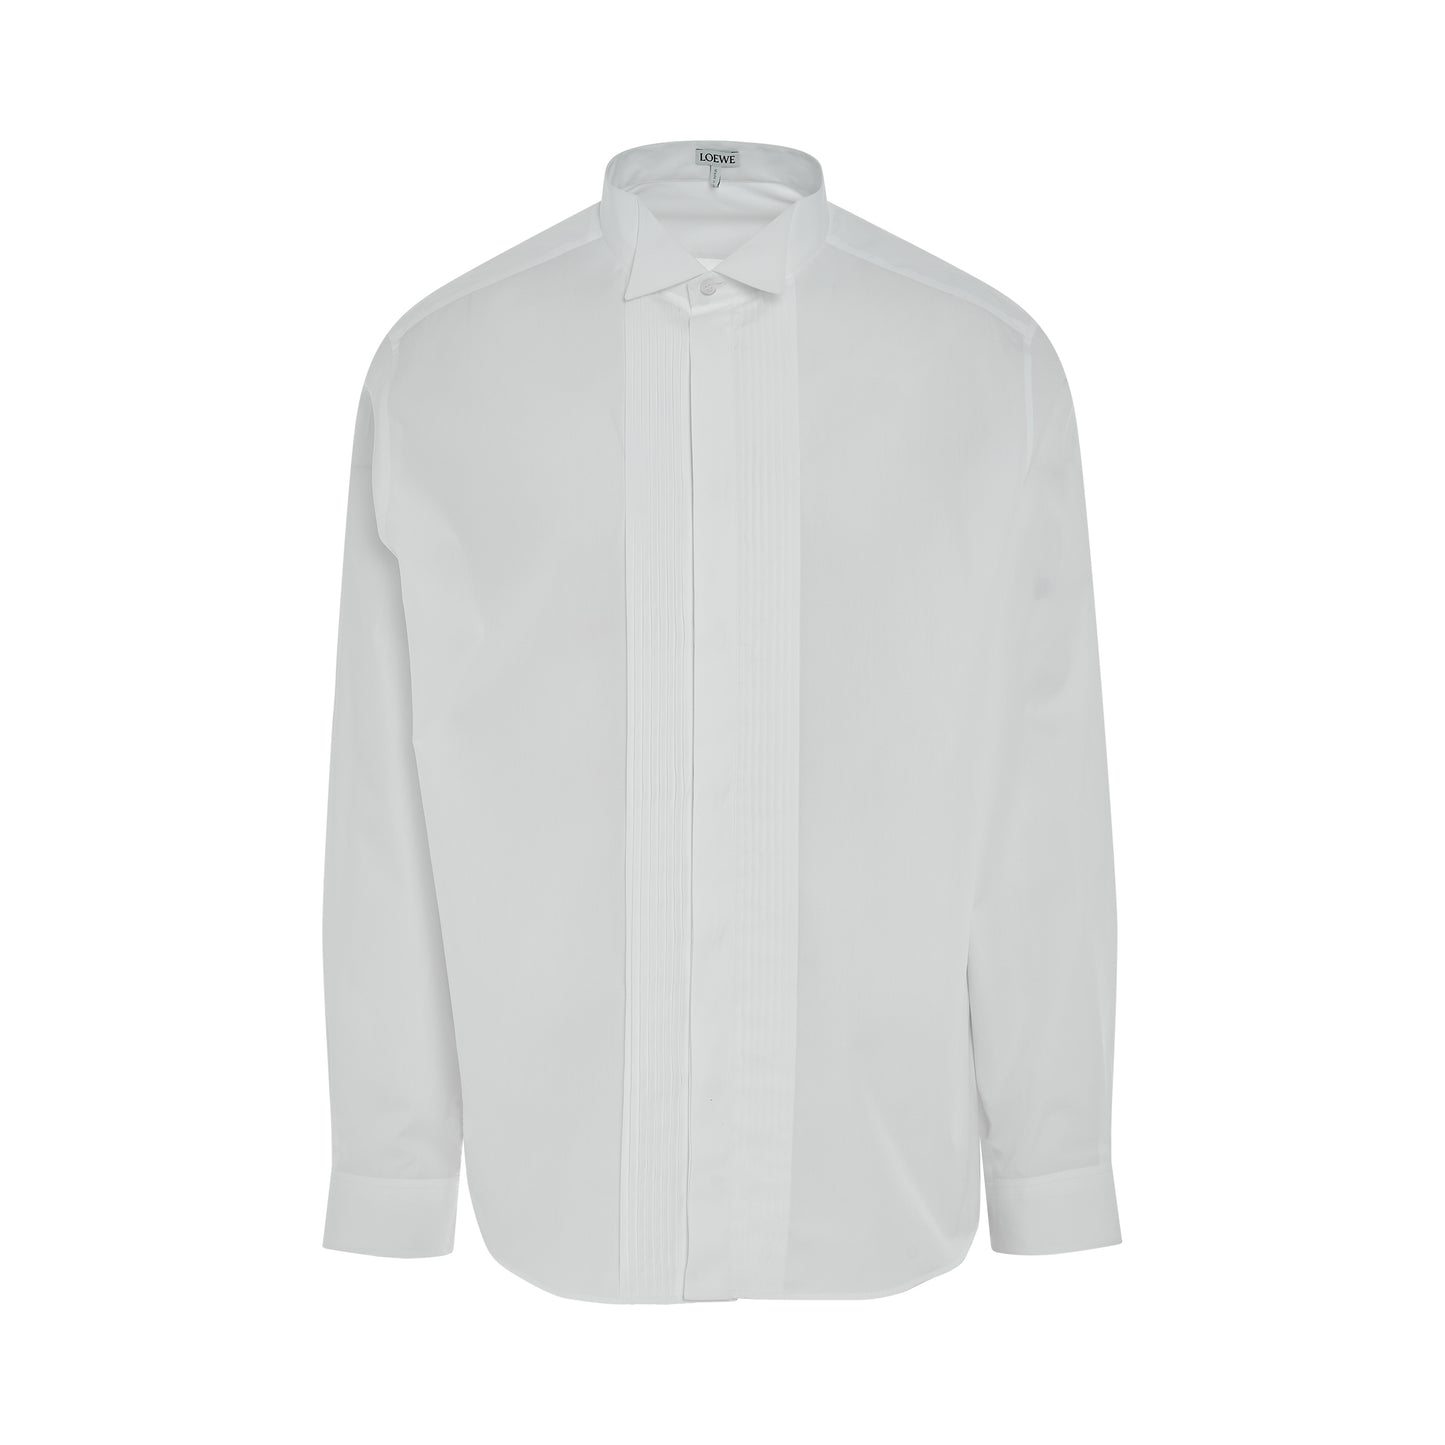 Wing Collar Shirt in White